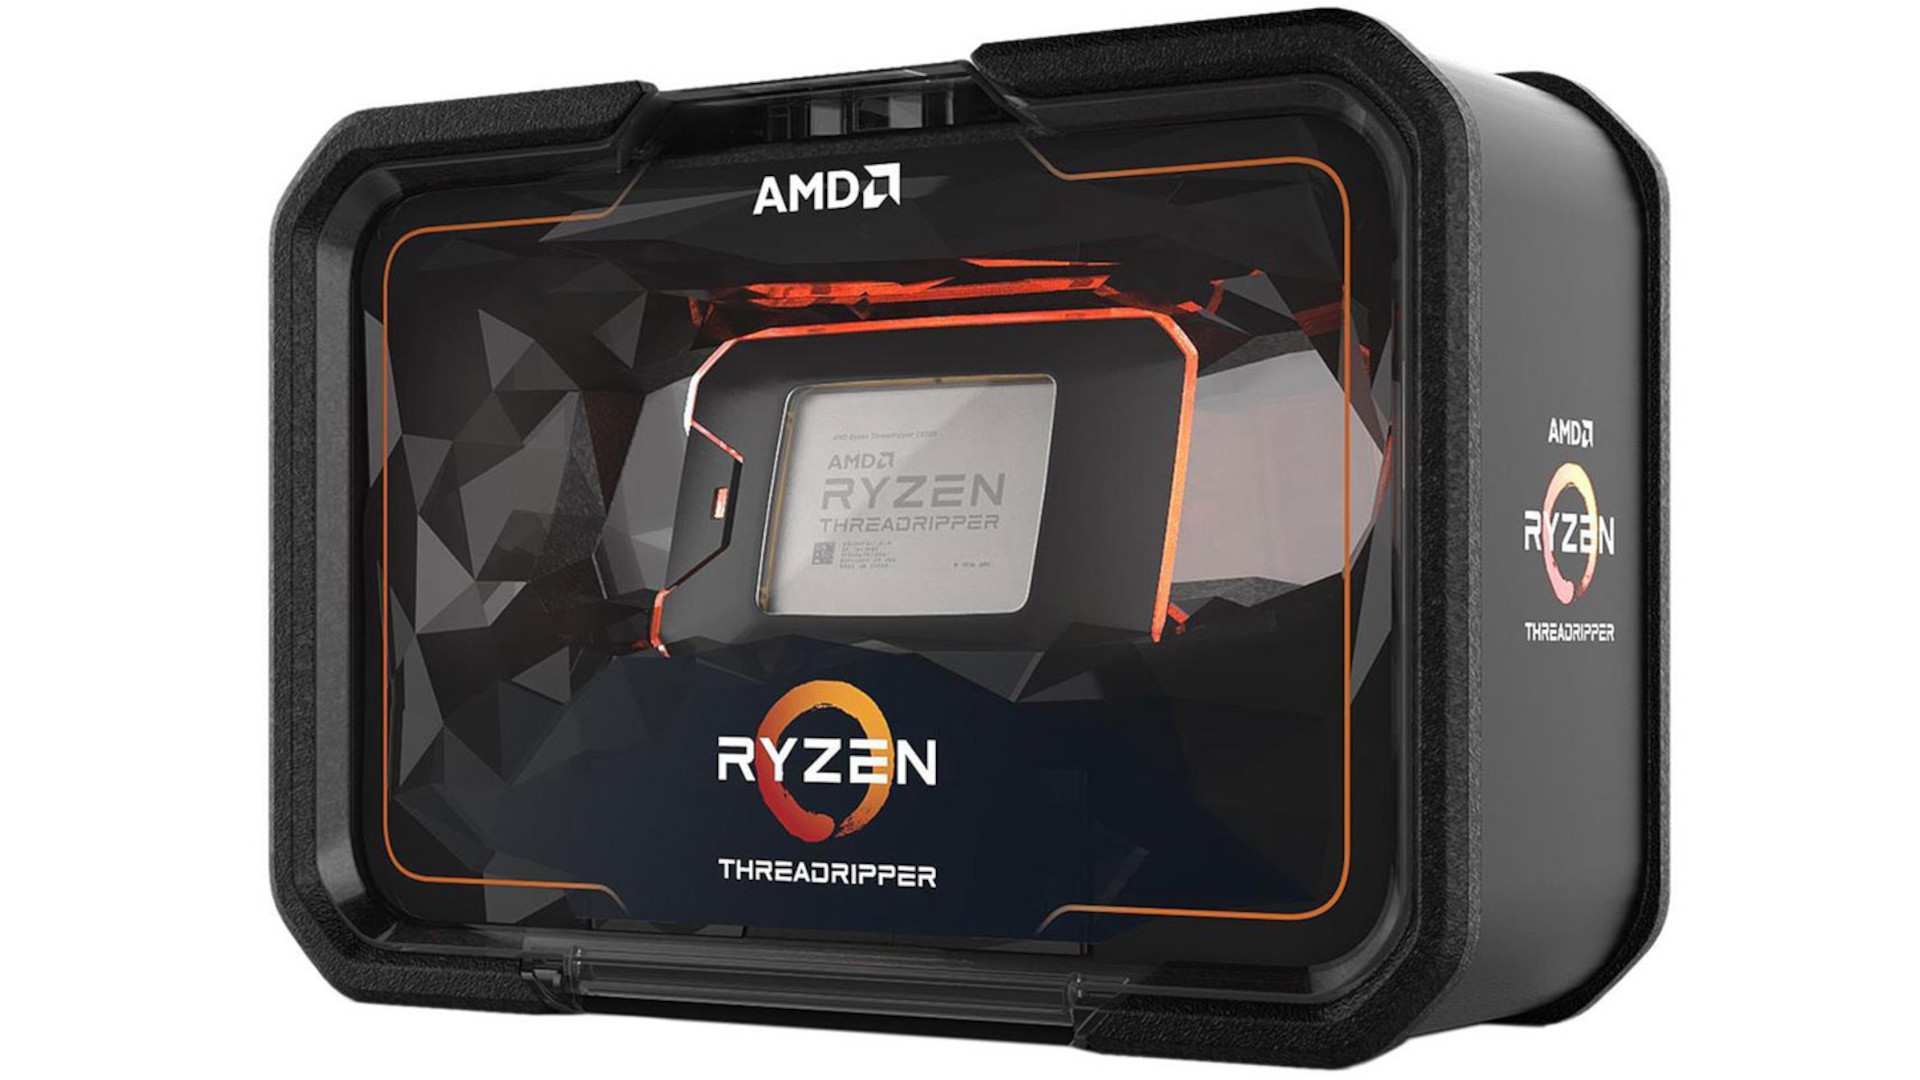 AMD Ryzen TR 2950X 2